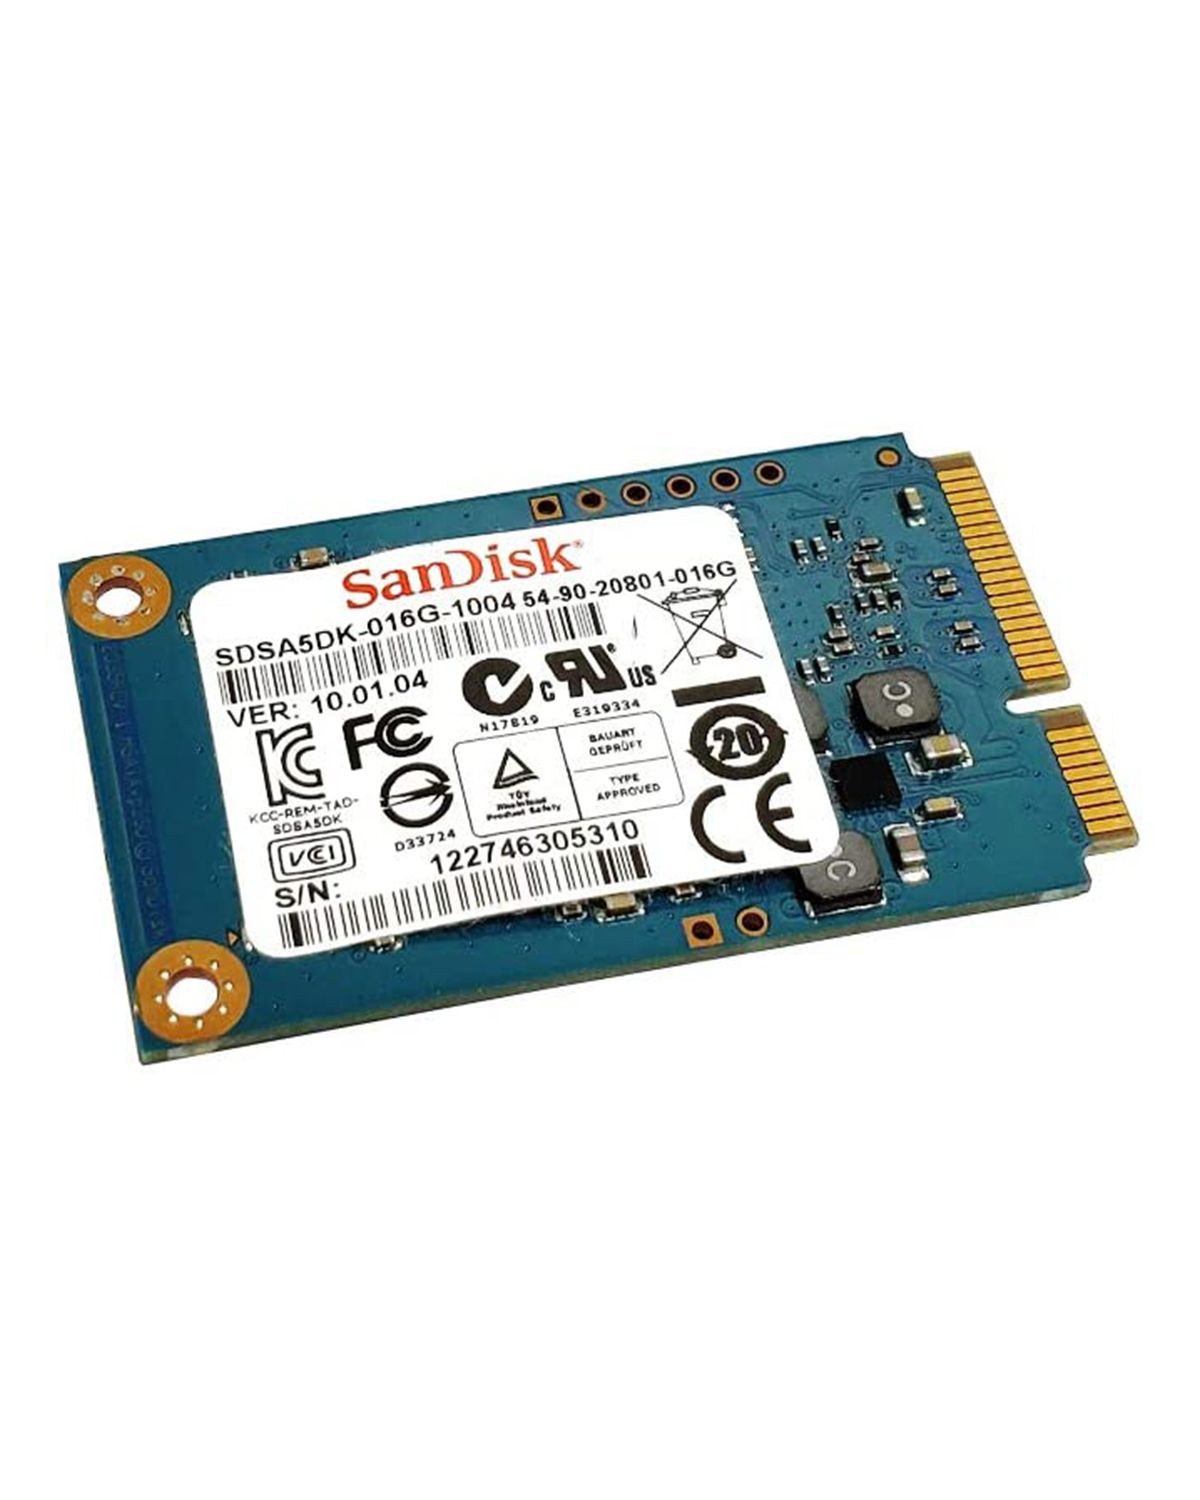 SanDisk U100 M.2 mSATA 16GB Solid State SSD SDSA5DK-016G-1006 